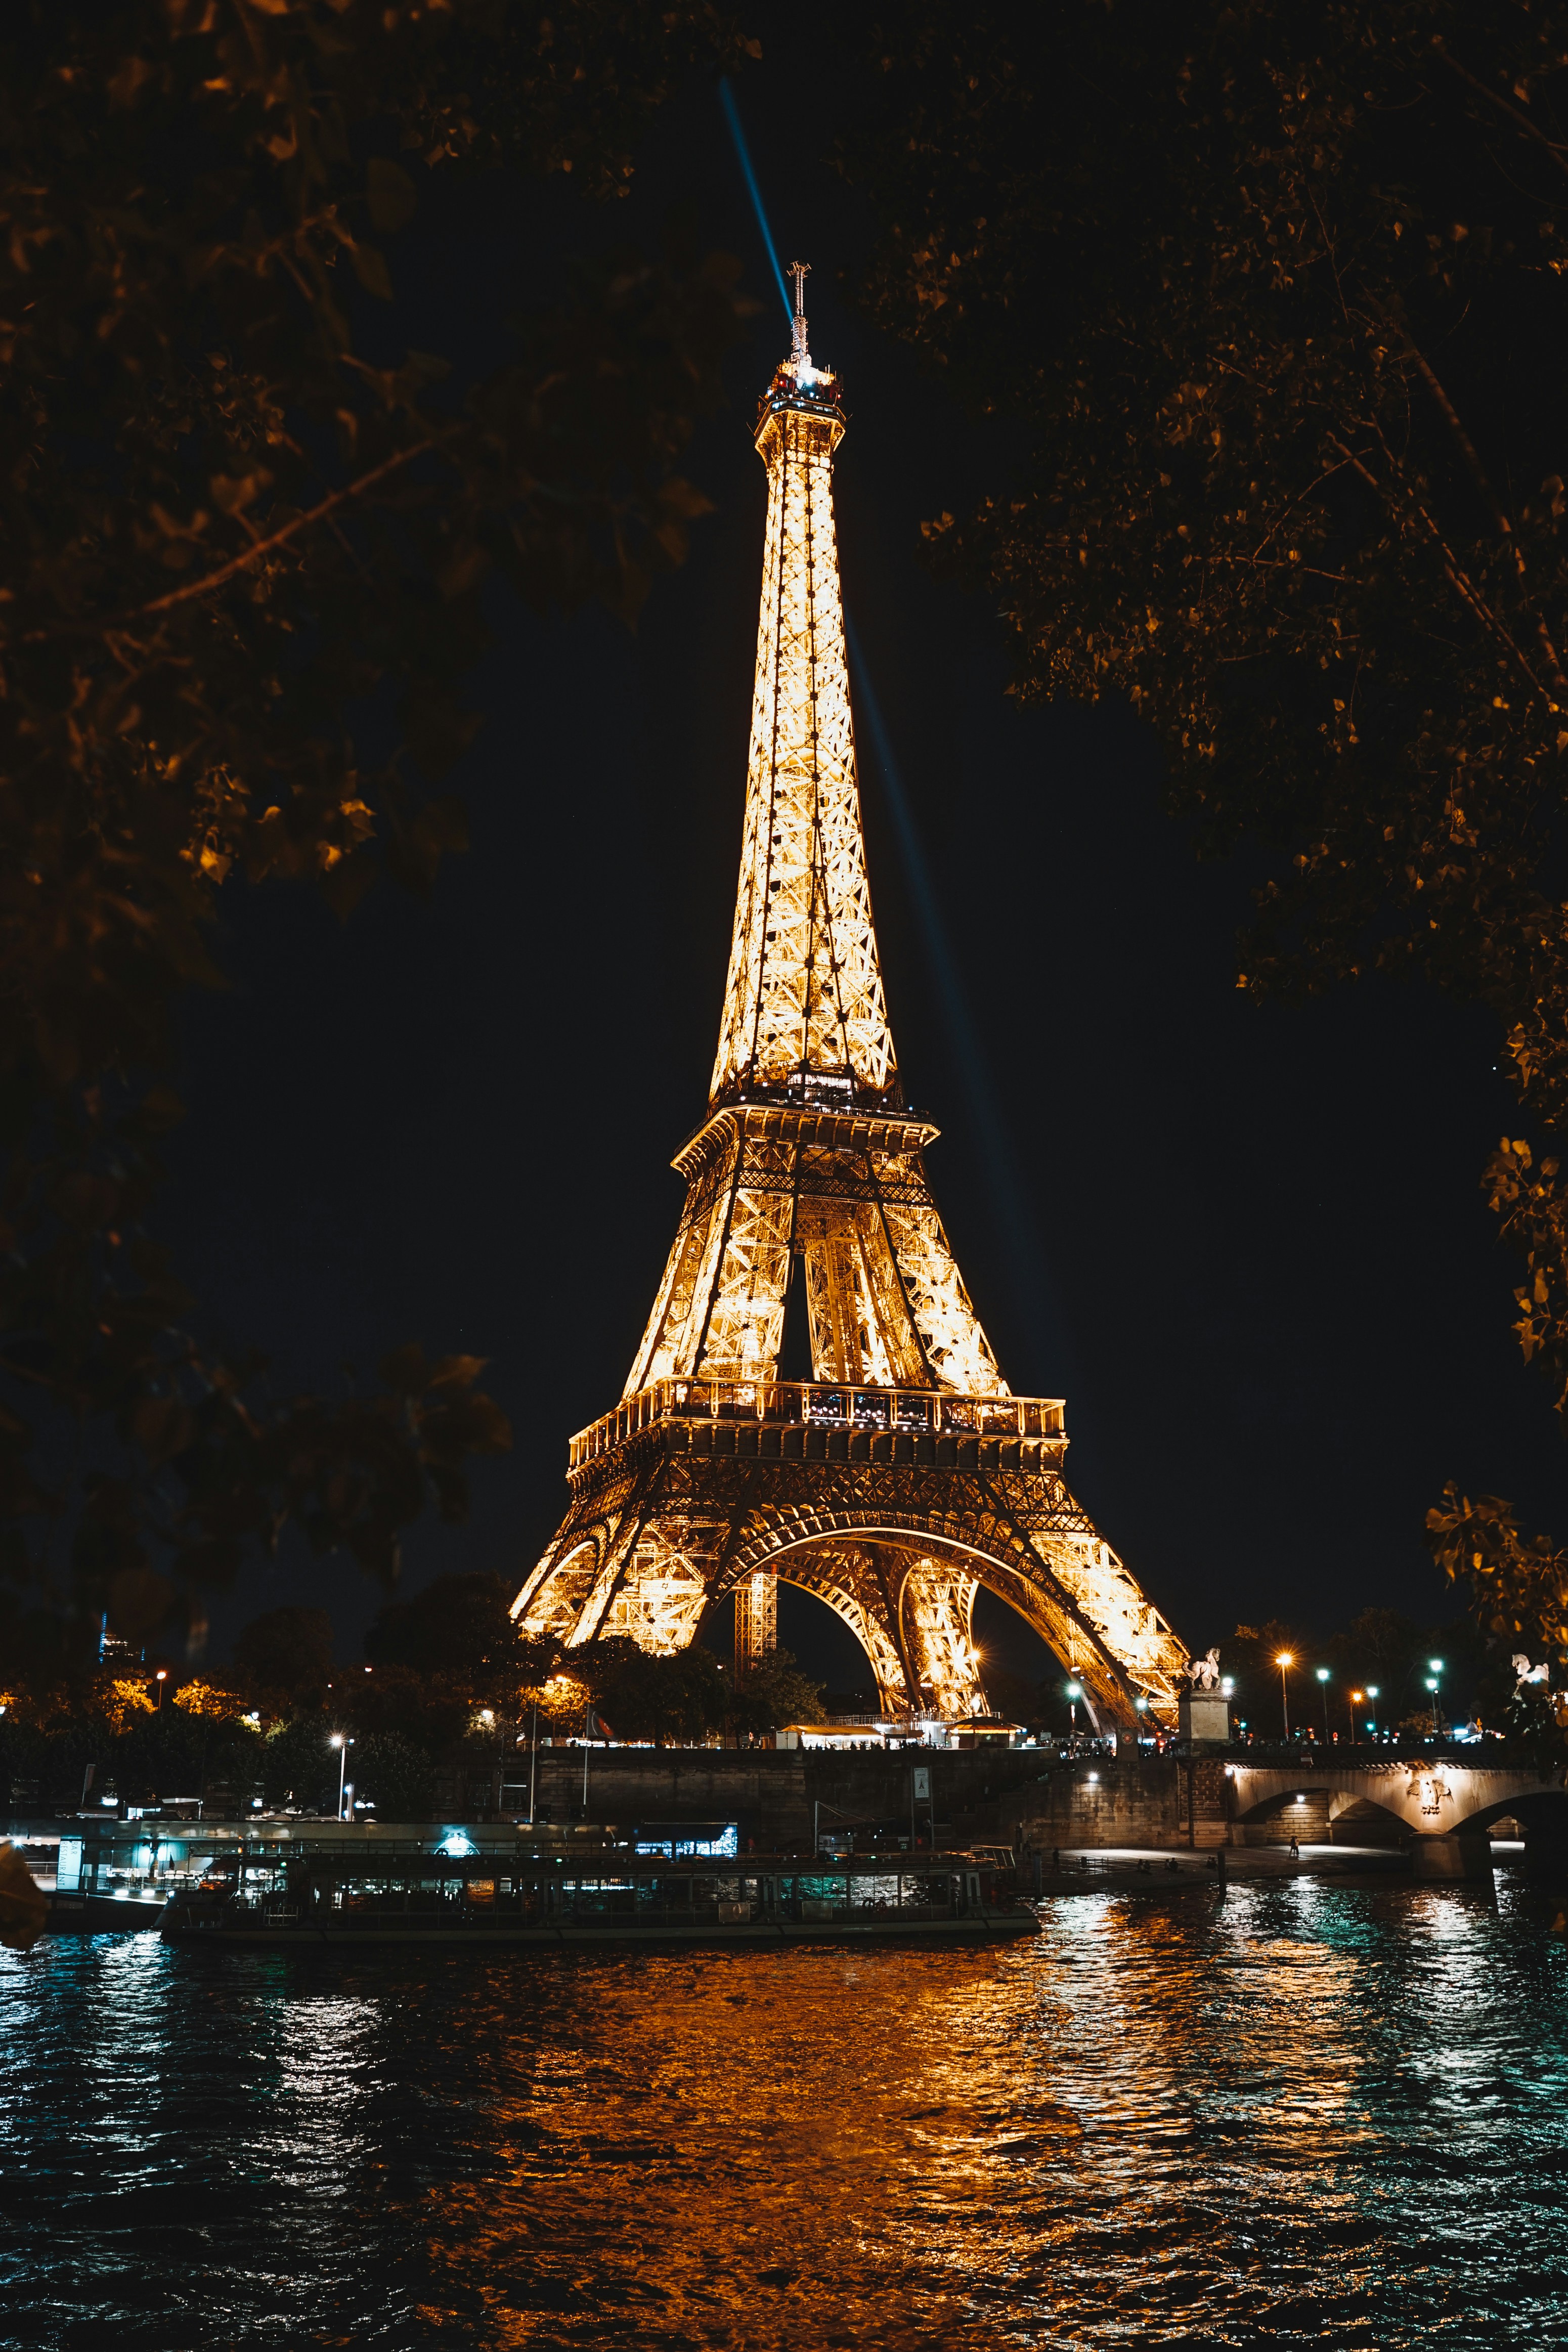 Eiffel tower lit up in Paris France